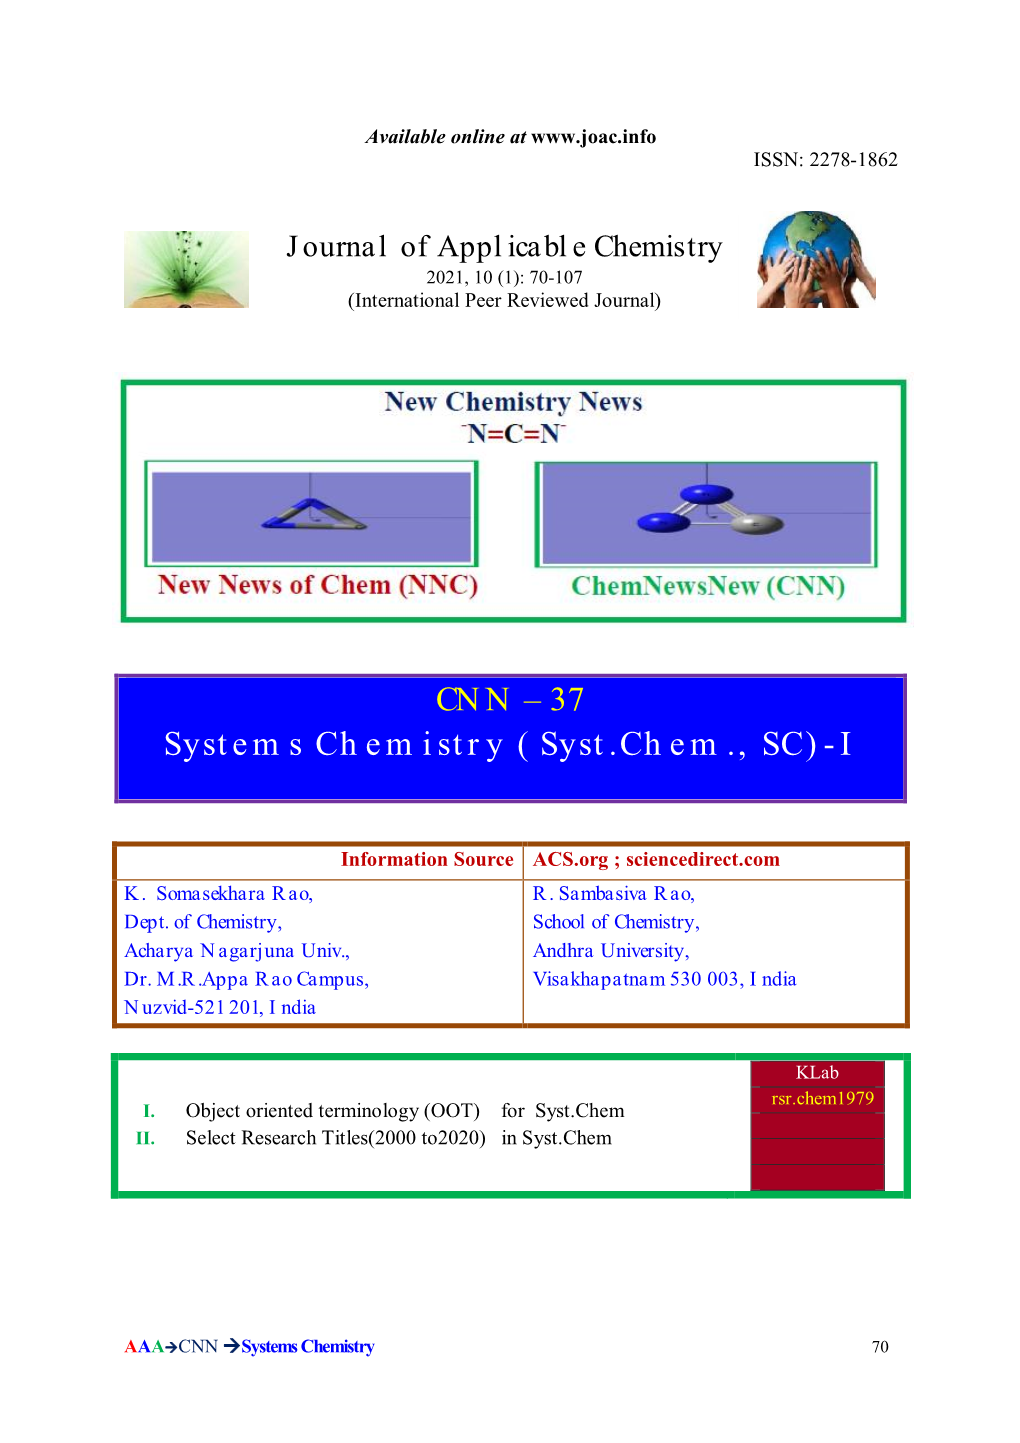 CNN – 37 Systems Chemistry (Syst.Chem., SC)-I